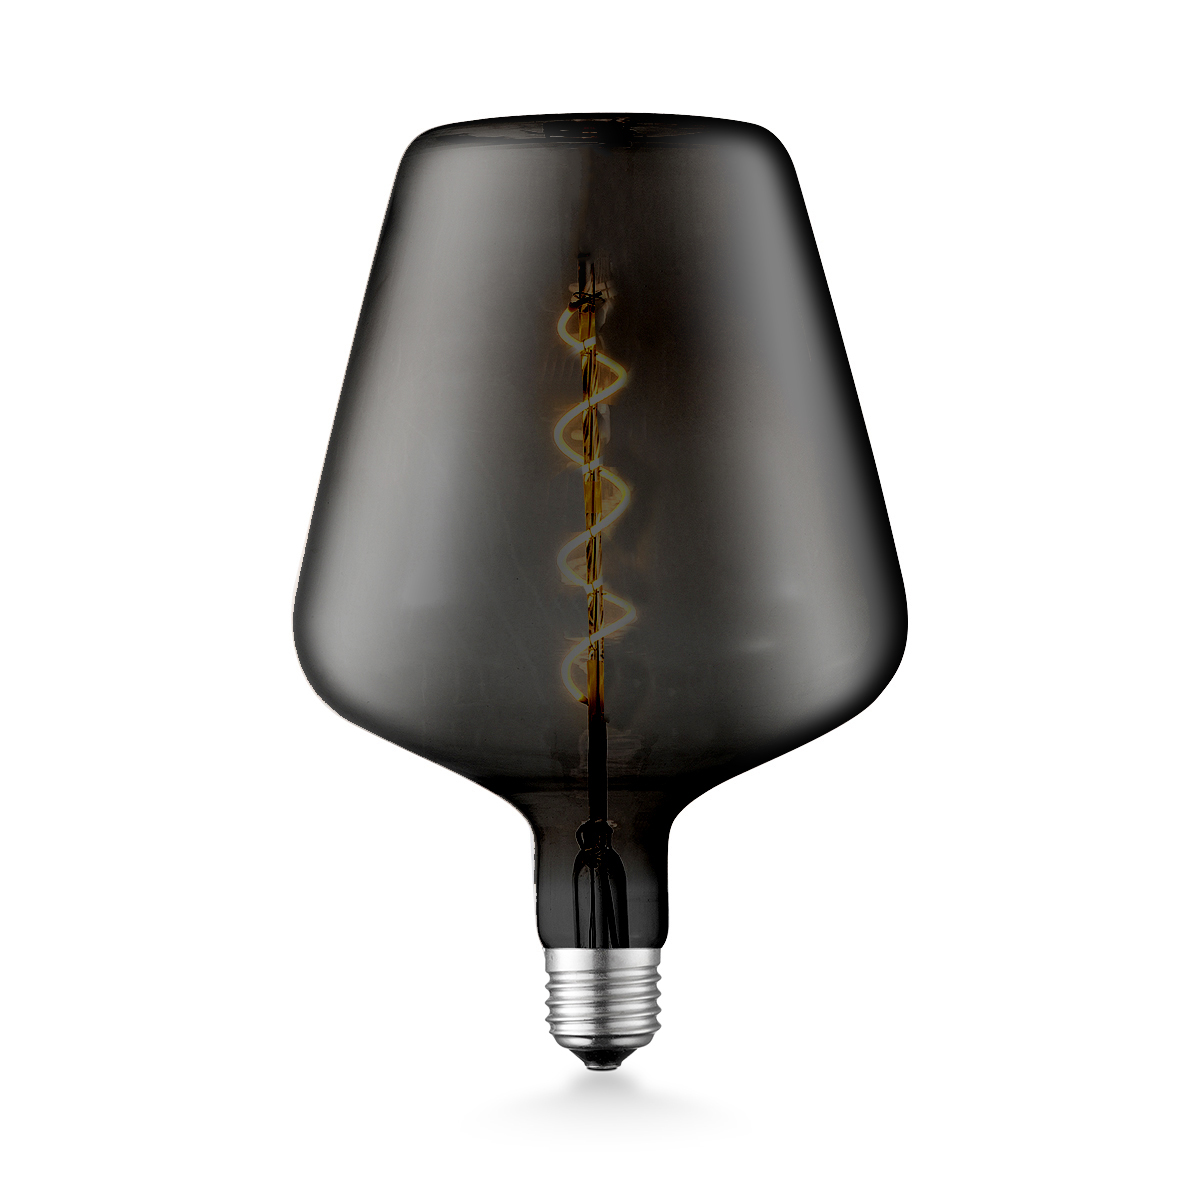 Tangla lighting - TLB-8061-04TM - LED Light Bulb Single Spiral filament - special 4W titanium - medium jar - dimmable - E27